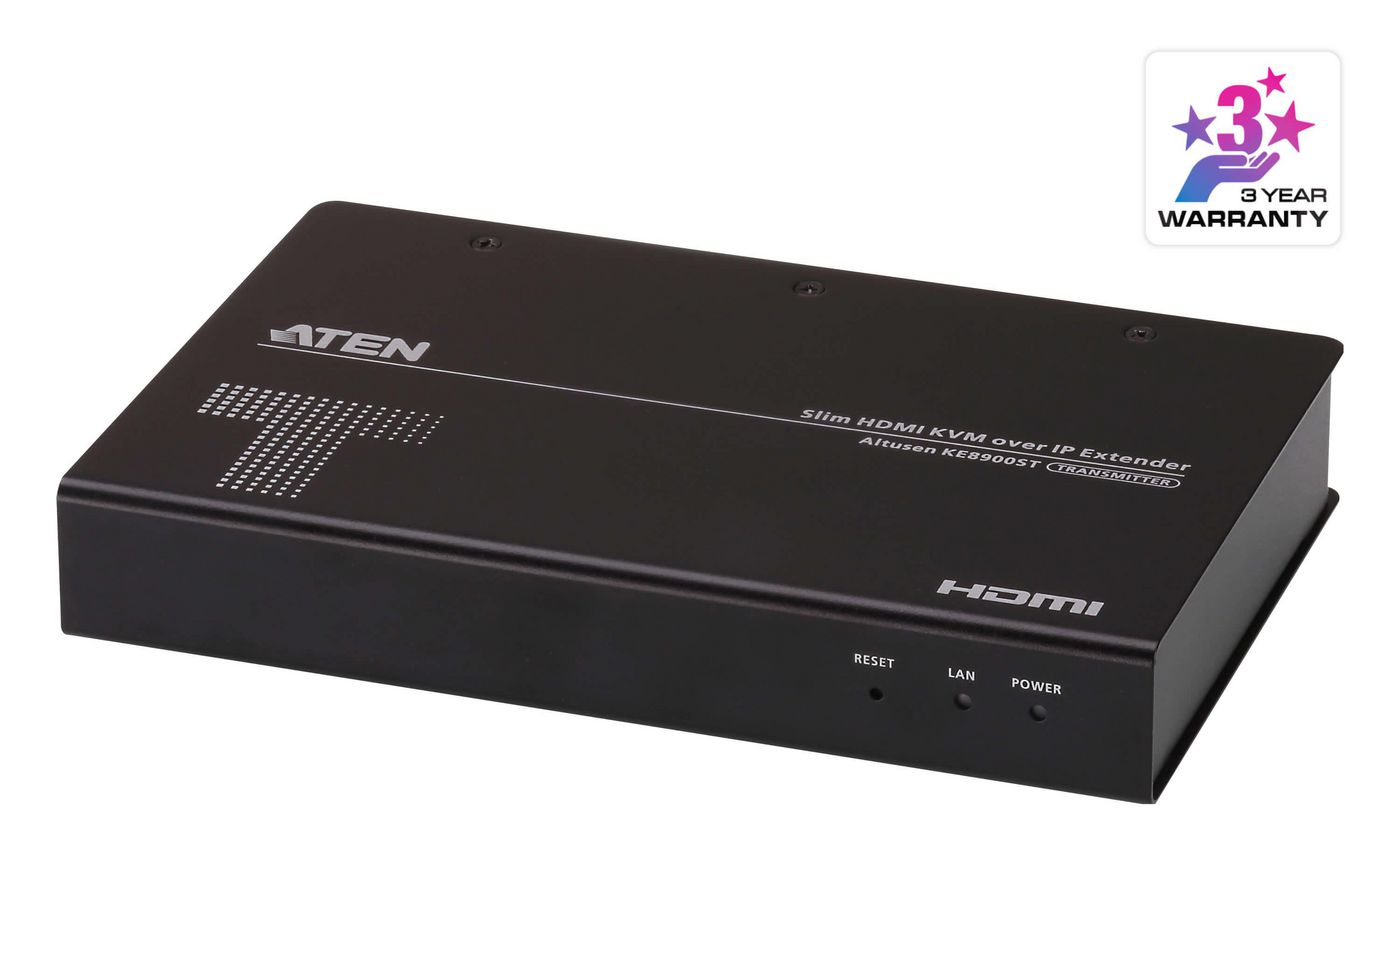 Aten KE8900ST-AX-G Slim HDMI Single Display 